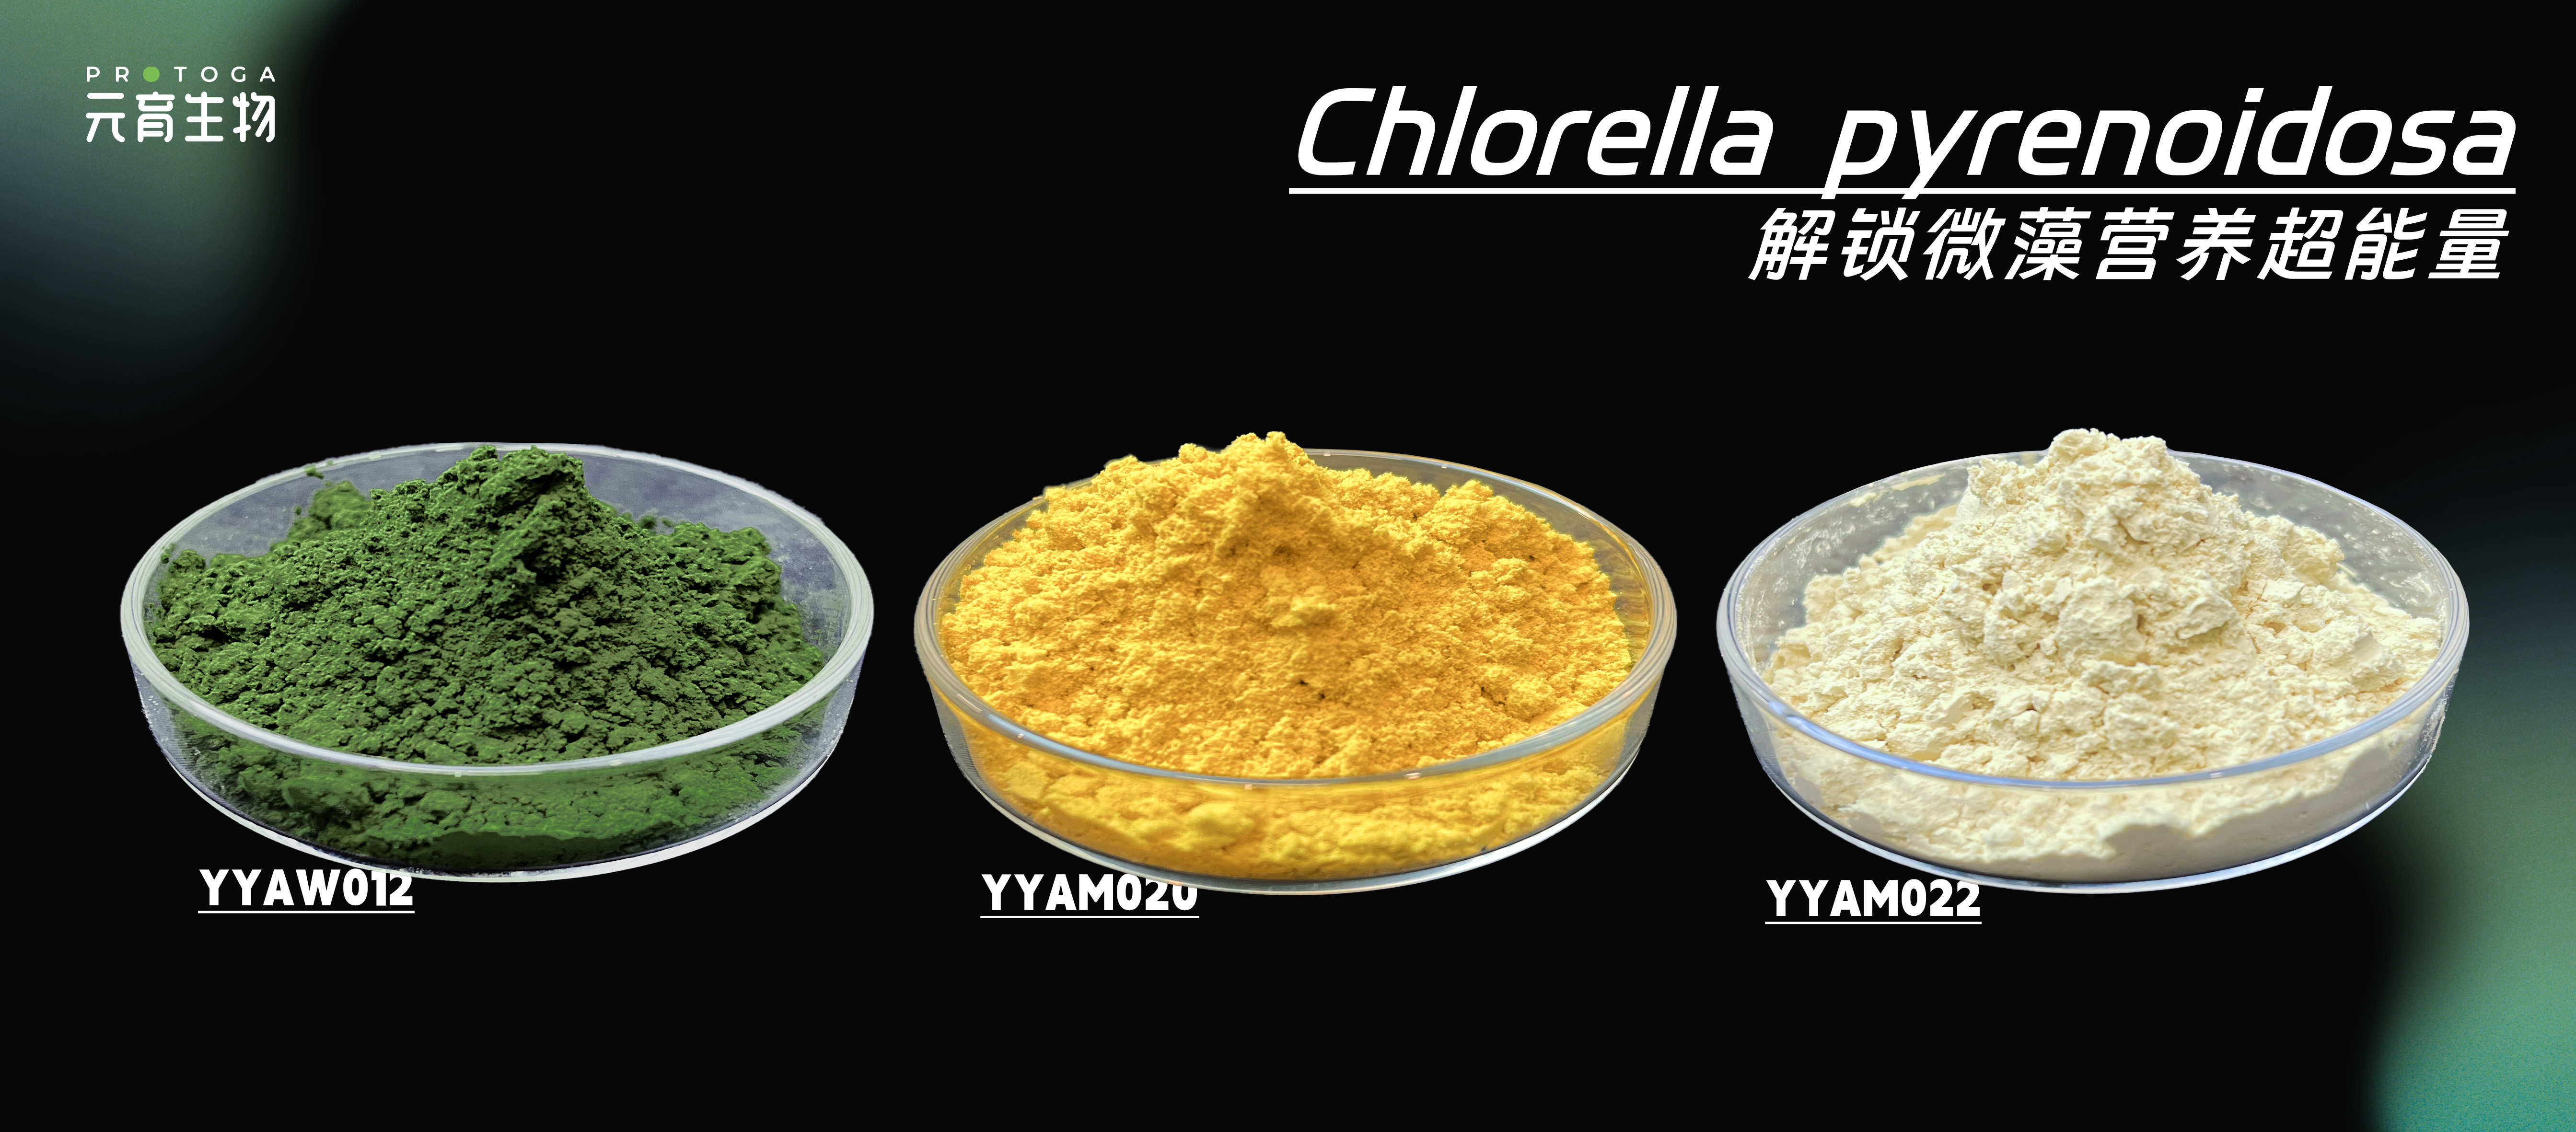 NEW Chlorella powder coming! Successful breeding of yellow and white Chlorella